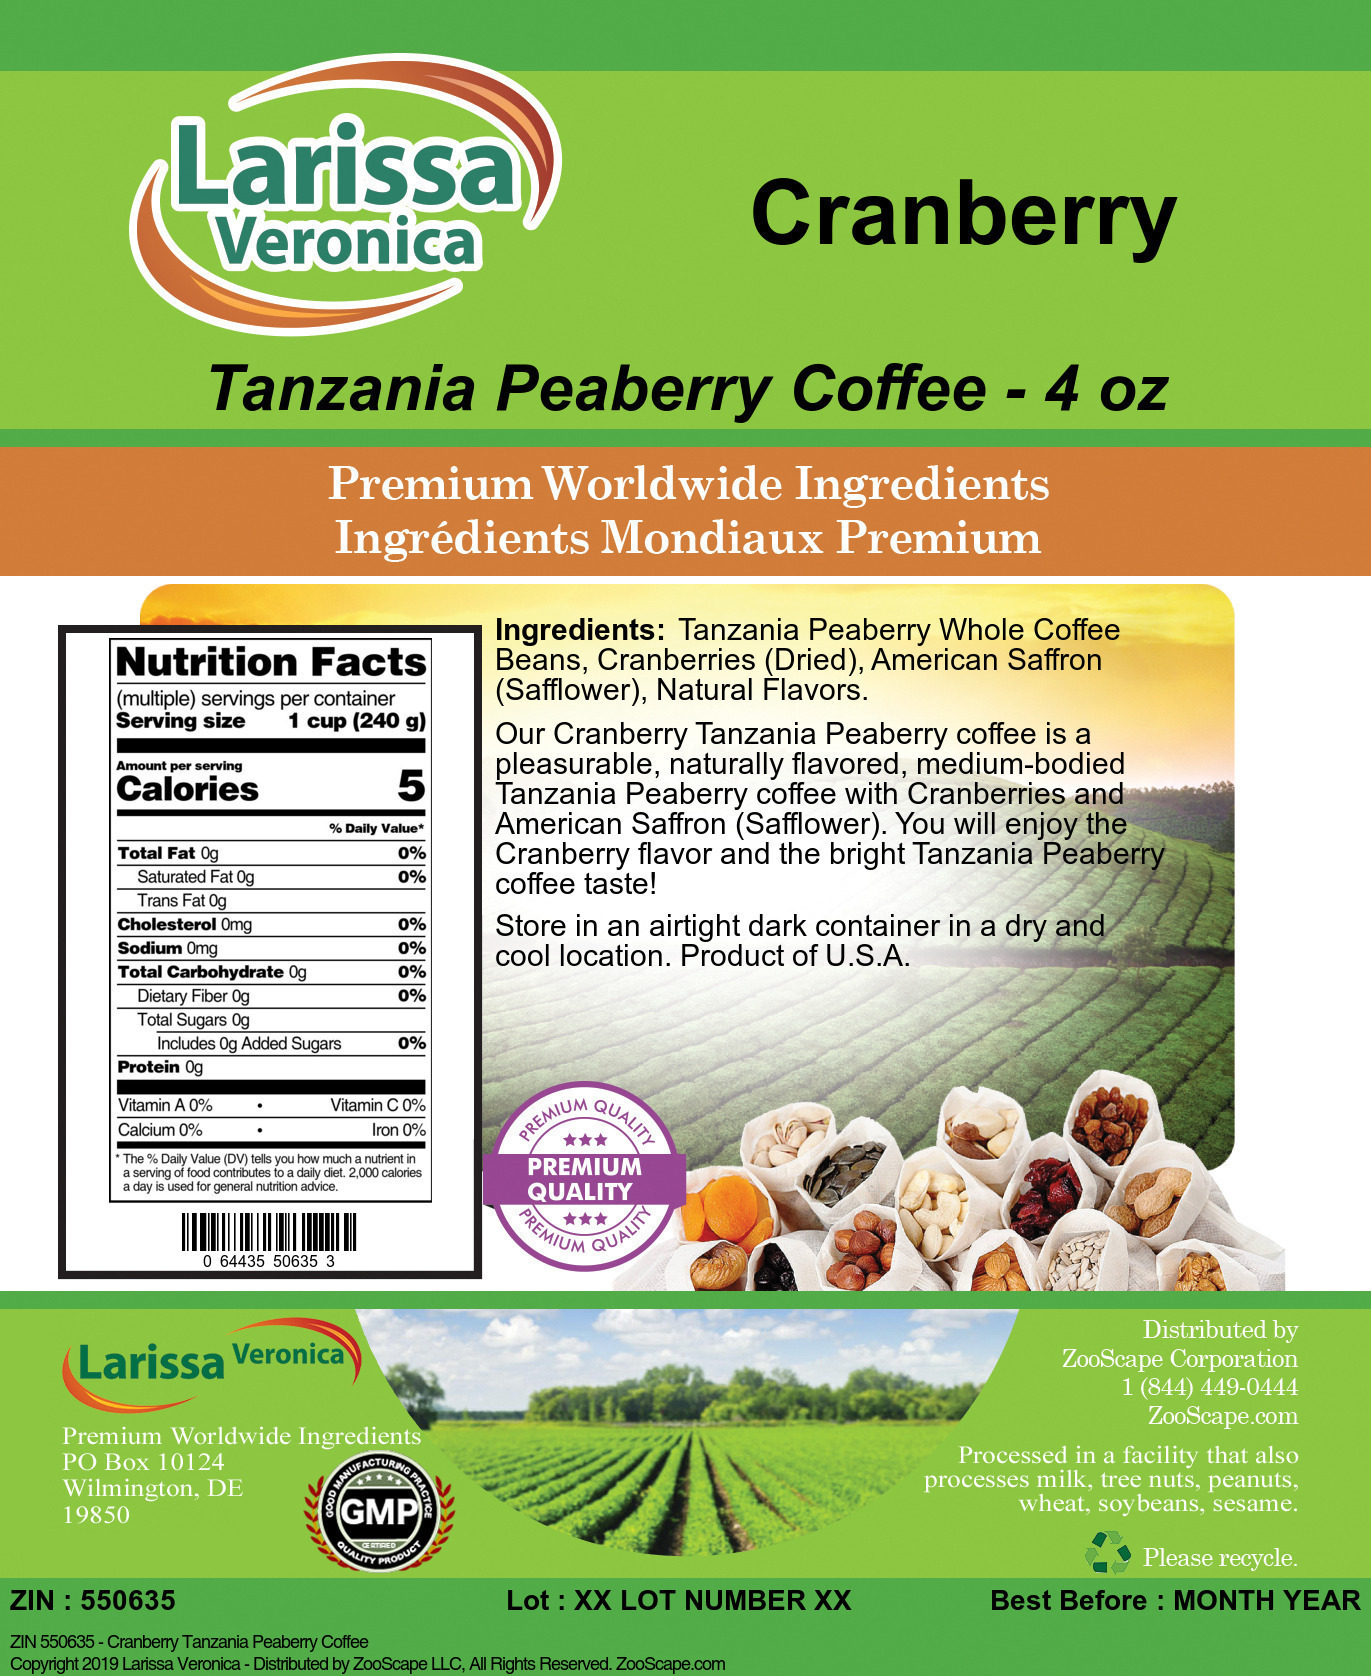 Cranberry Tanzania Peaberry Coffee - Label